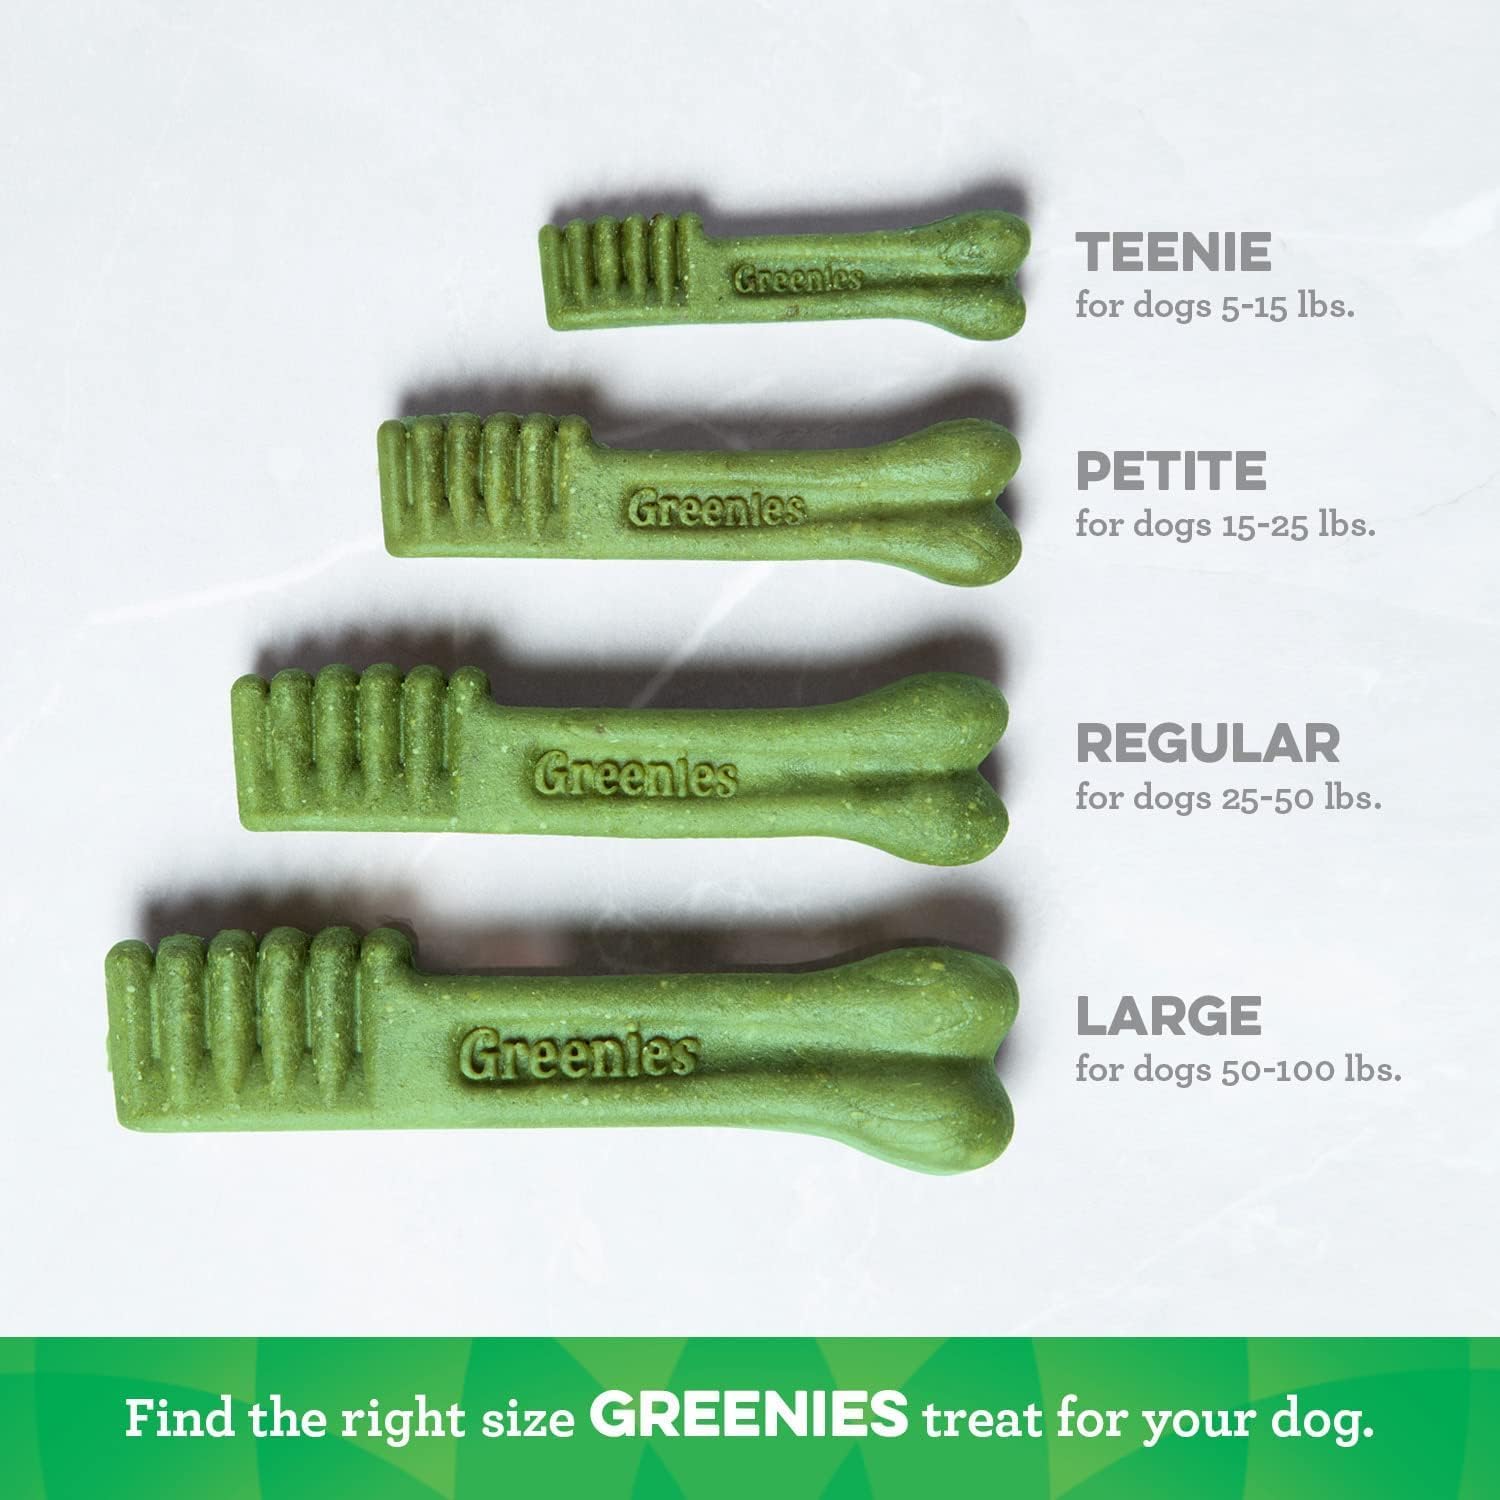 Greenies Bursting Blueberry Dog Dental Treat Regular Size 12 count - Pack of 3